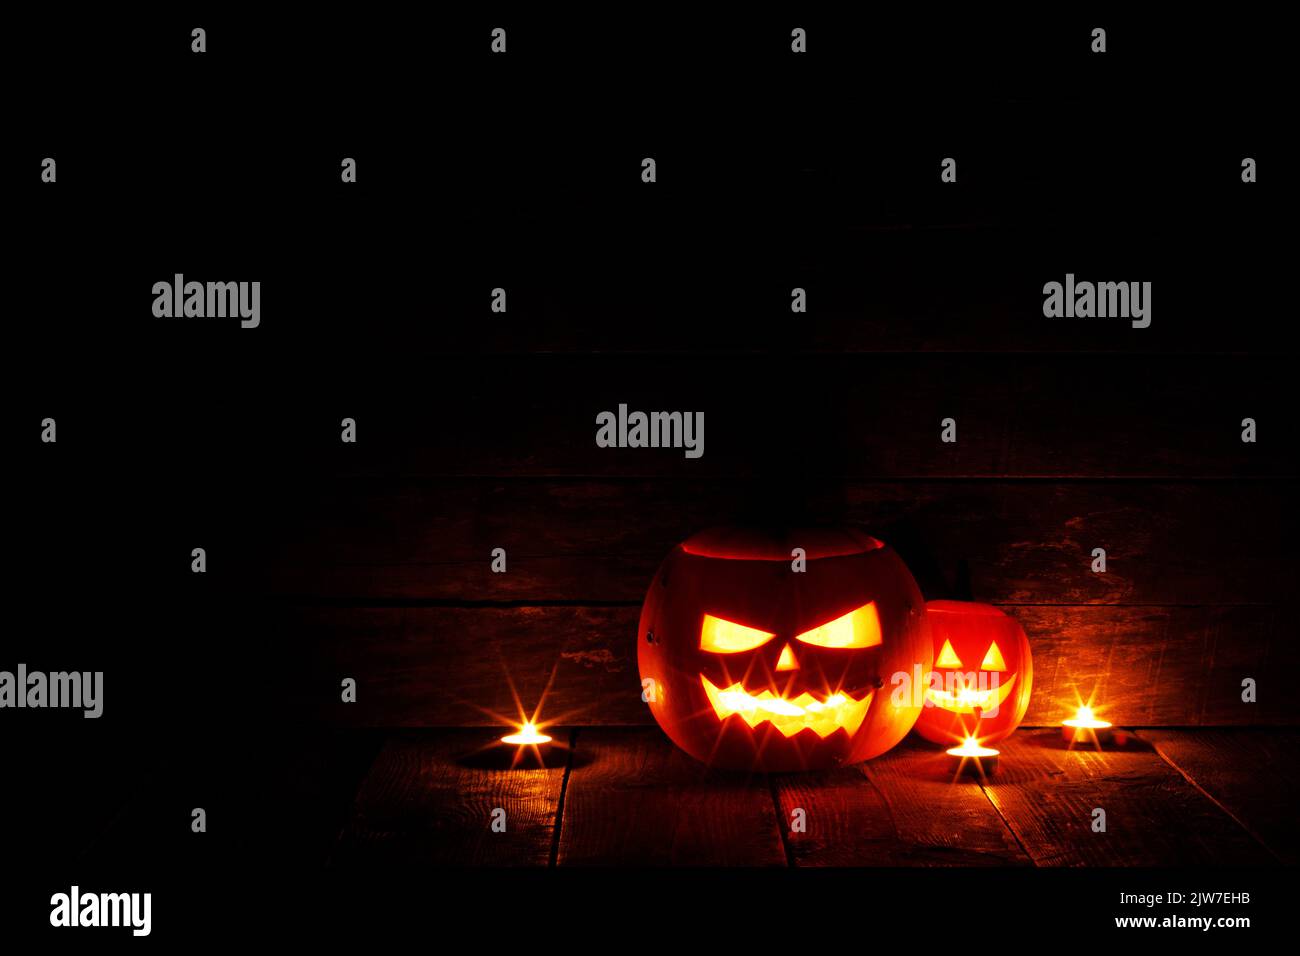 Halloween Jack O Lantern pumpkins and burning candles traditional decoration Stock Photo